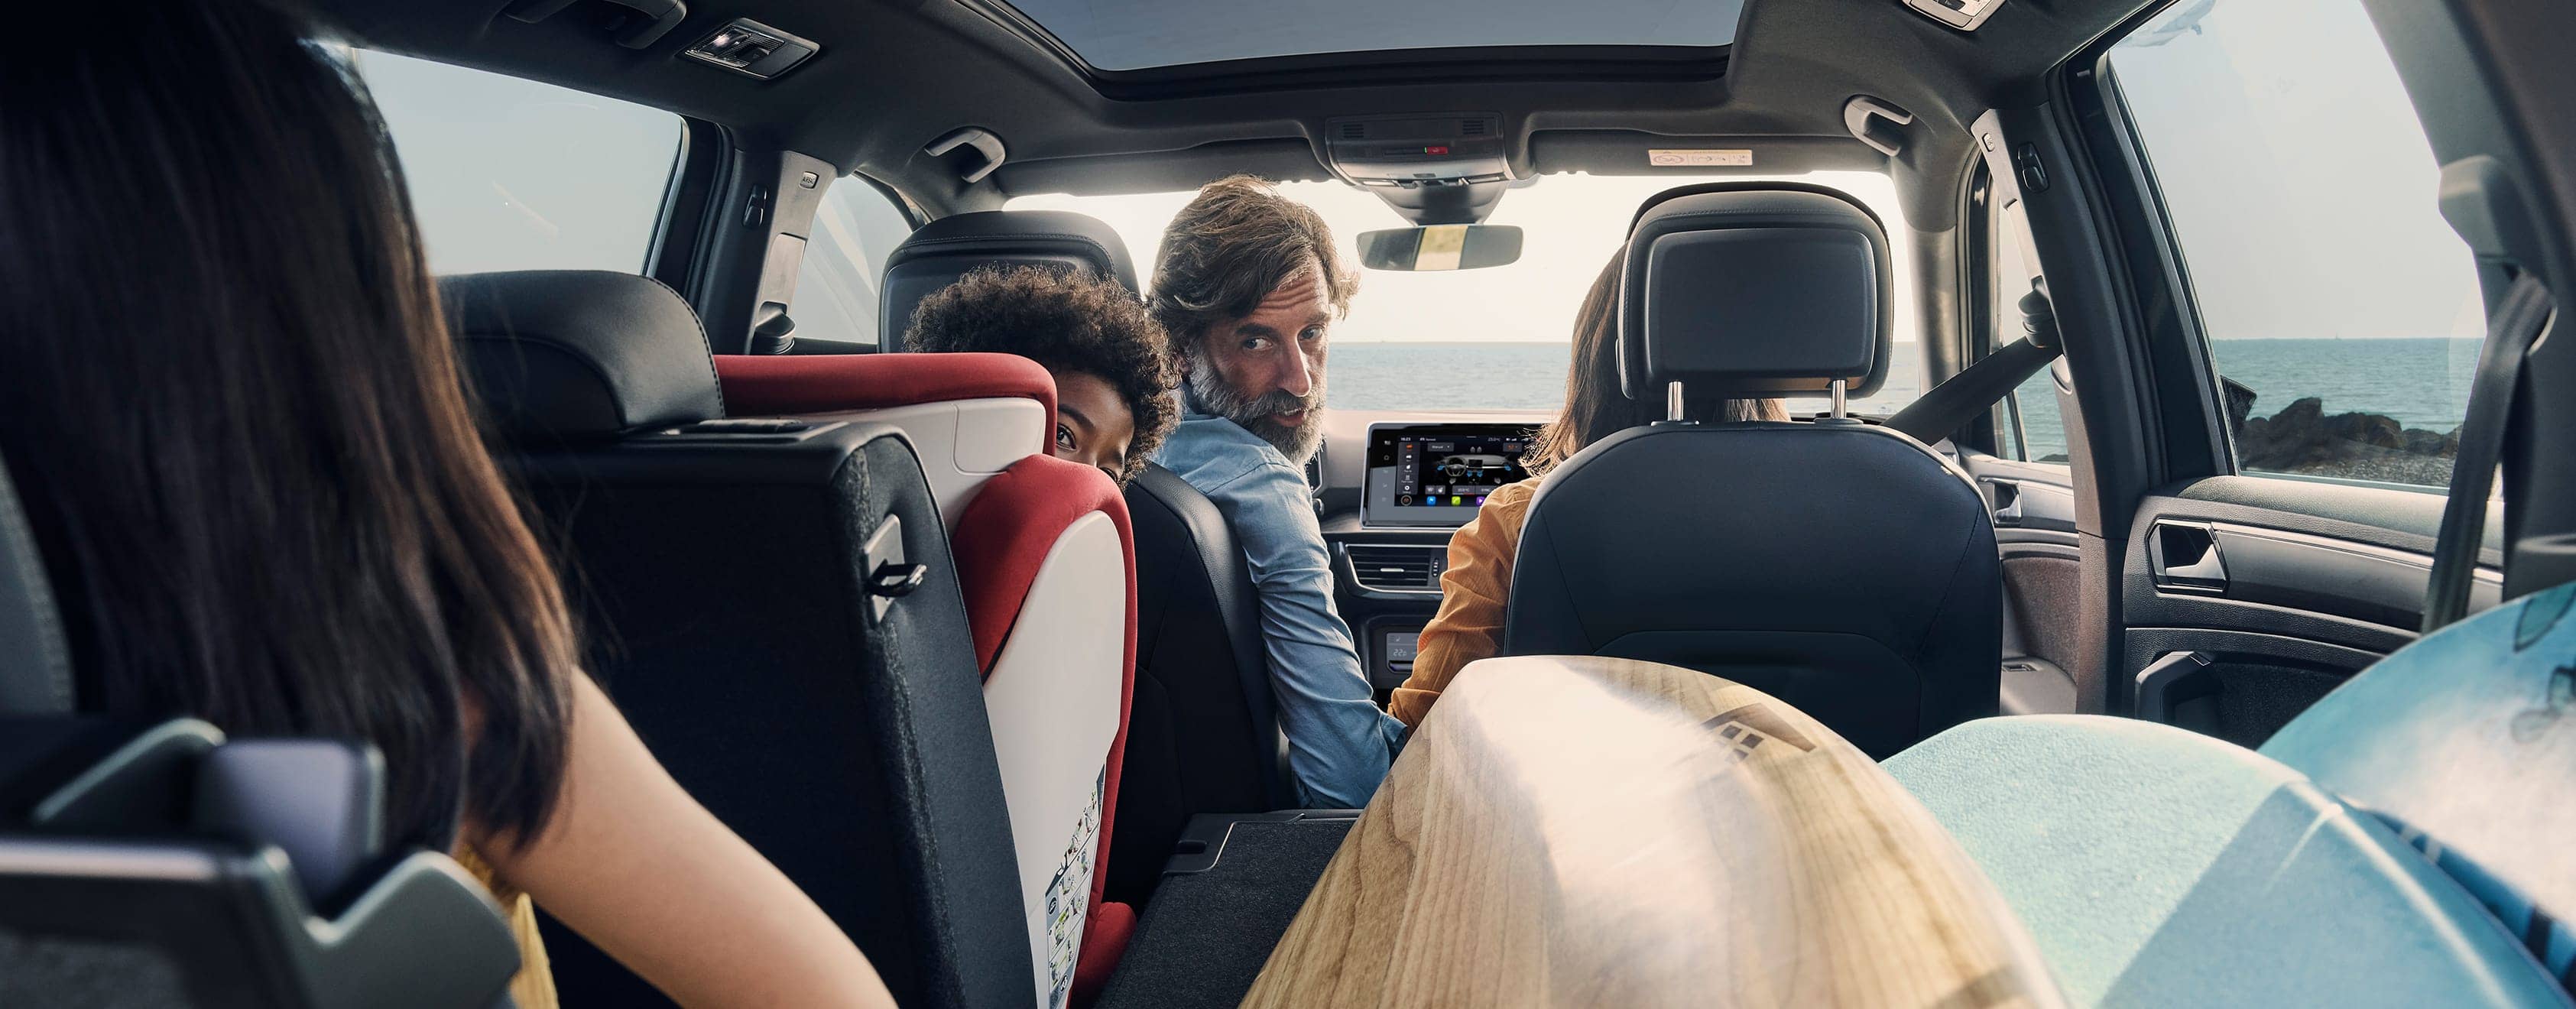 New SEAT Tarraco SUV 7 seater interior design foldable folding sliding seats